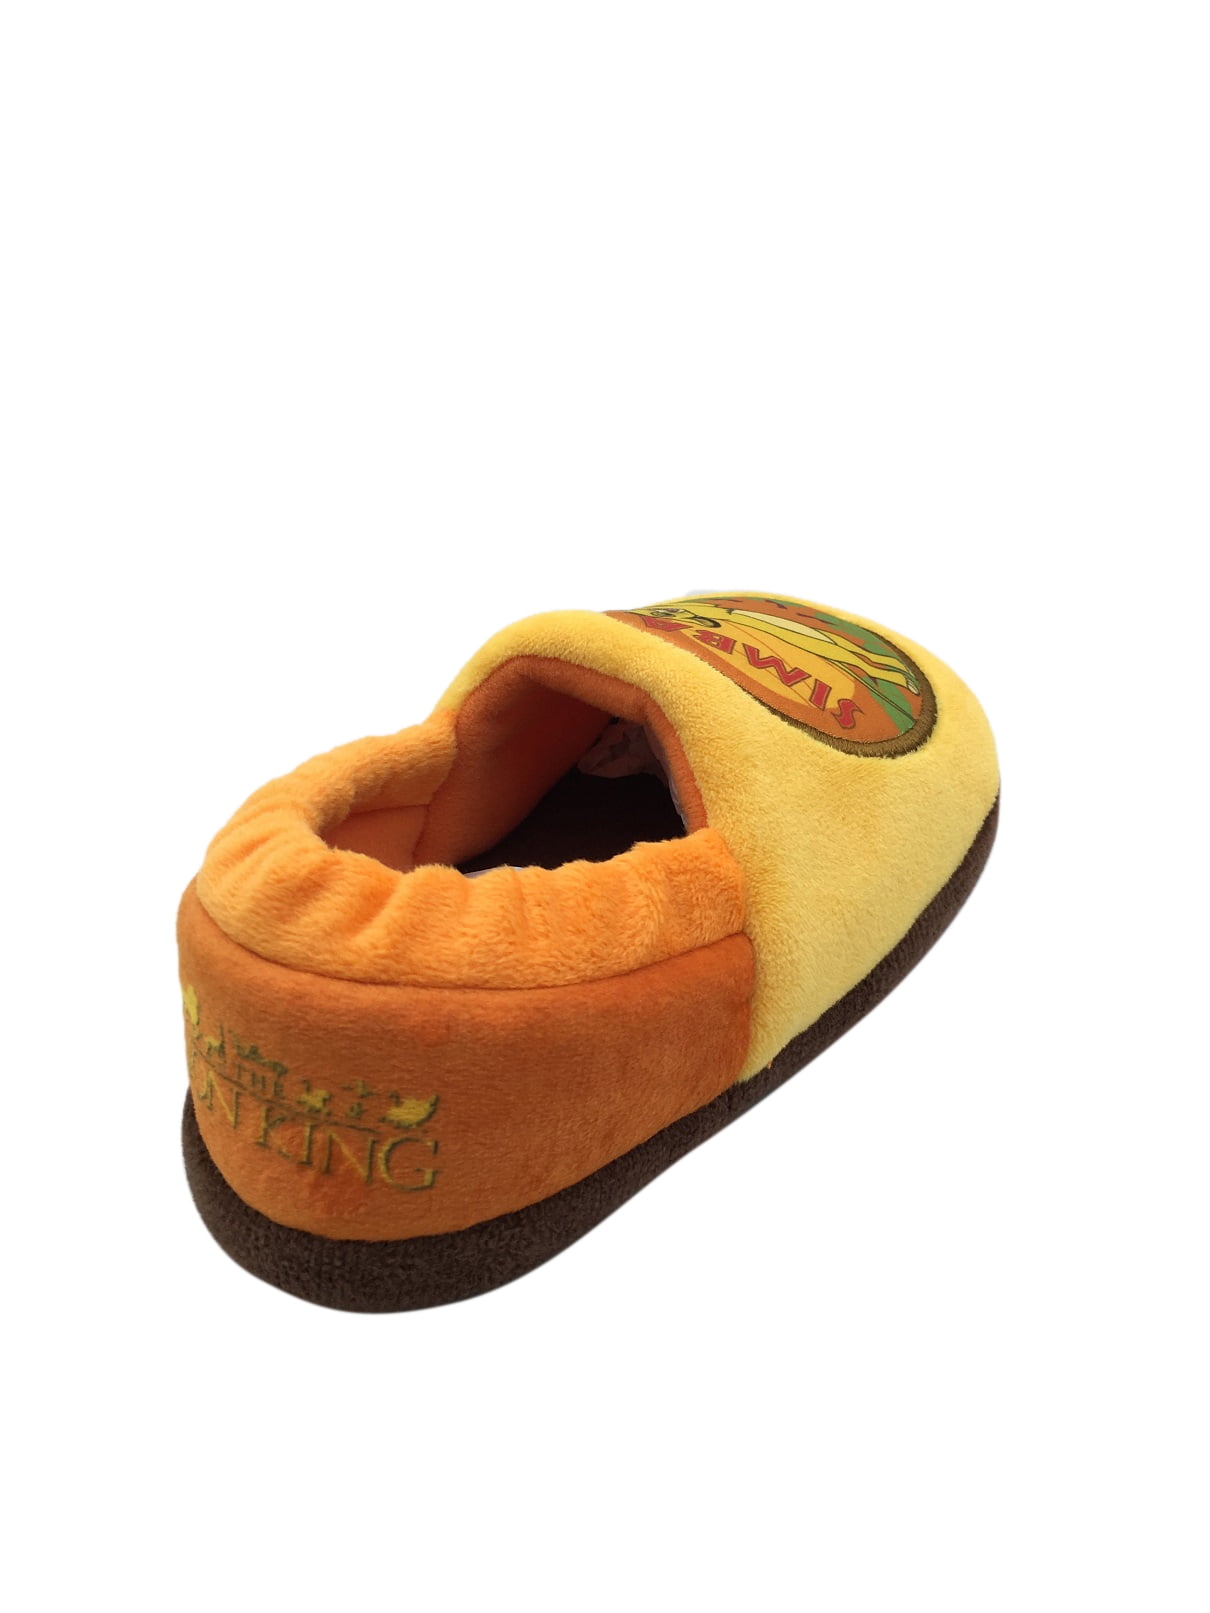 Boys'/Girls' Slippers Toddler' Shoes DISNEY'S THE LION KING SIMBA orange  NEW 